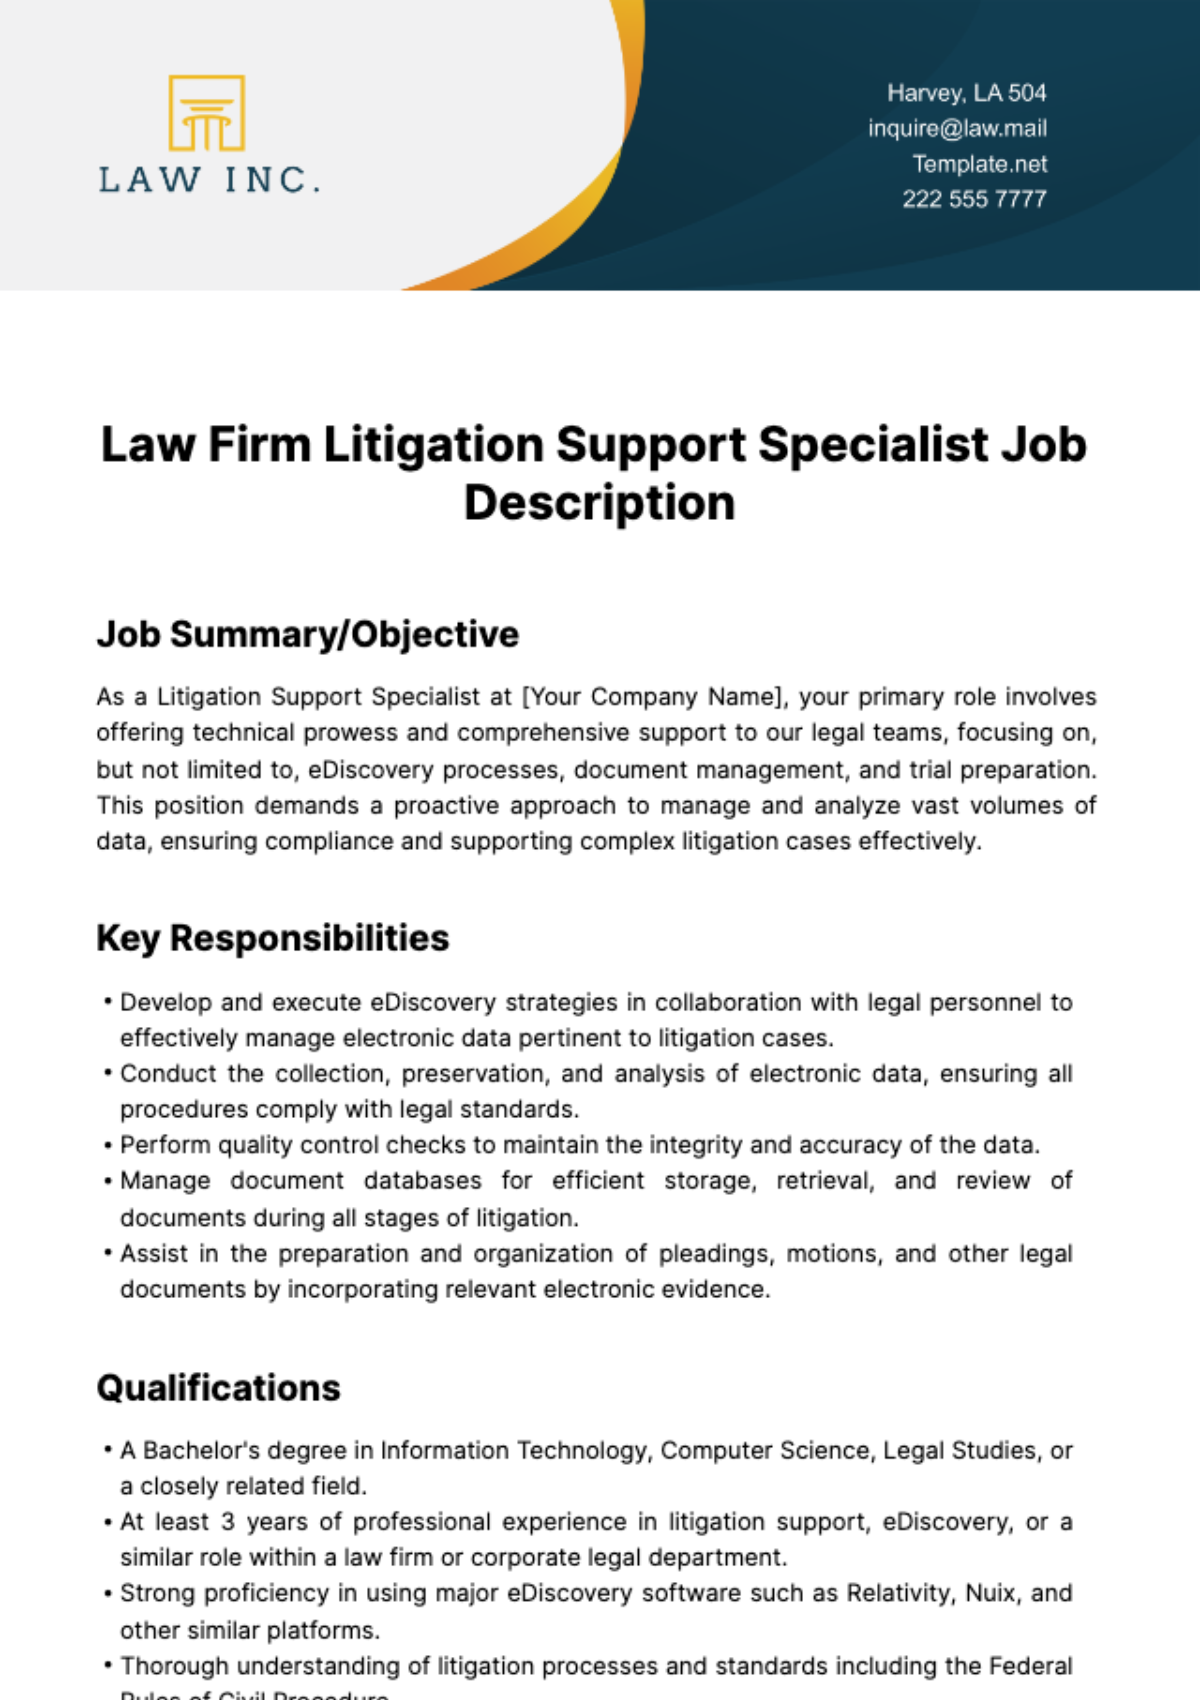 Law Firm Litigation Support Specialist Job Description Template